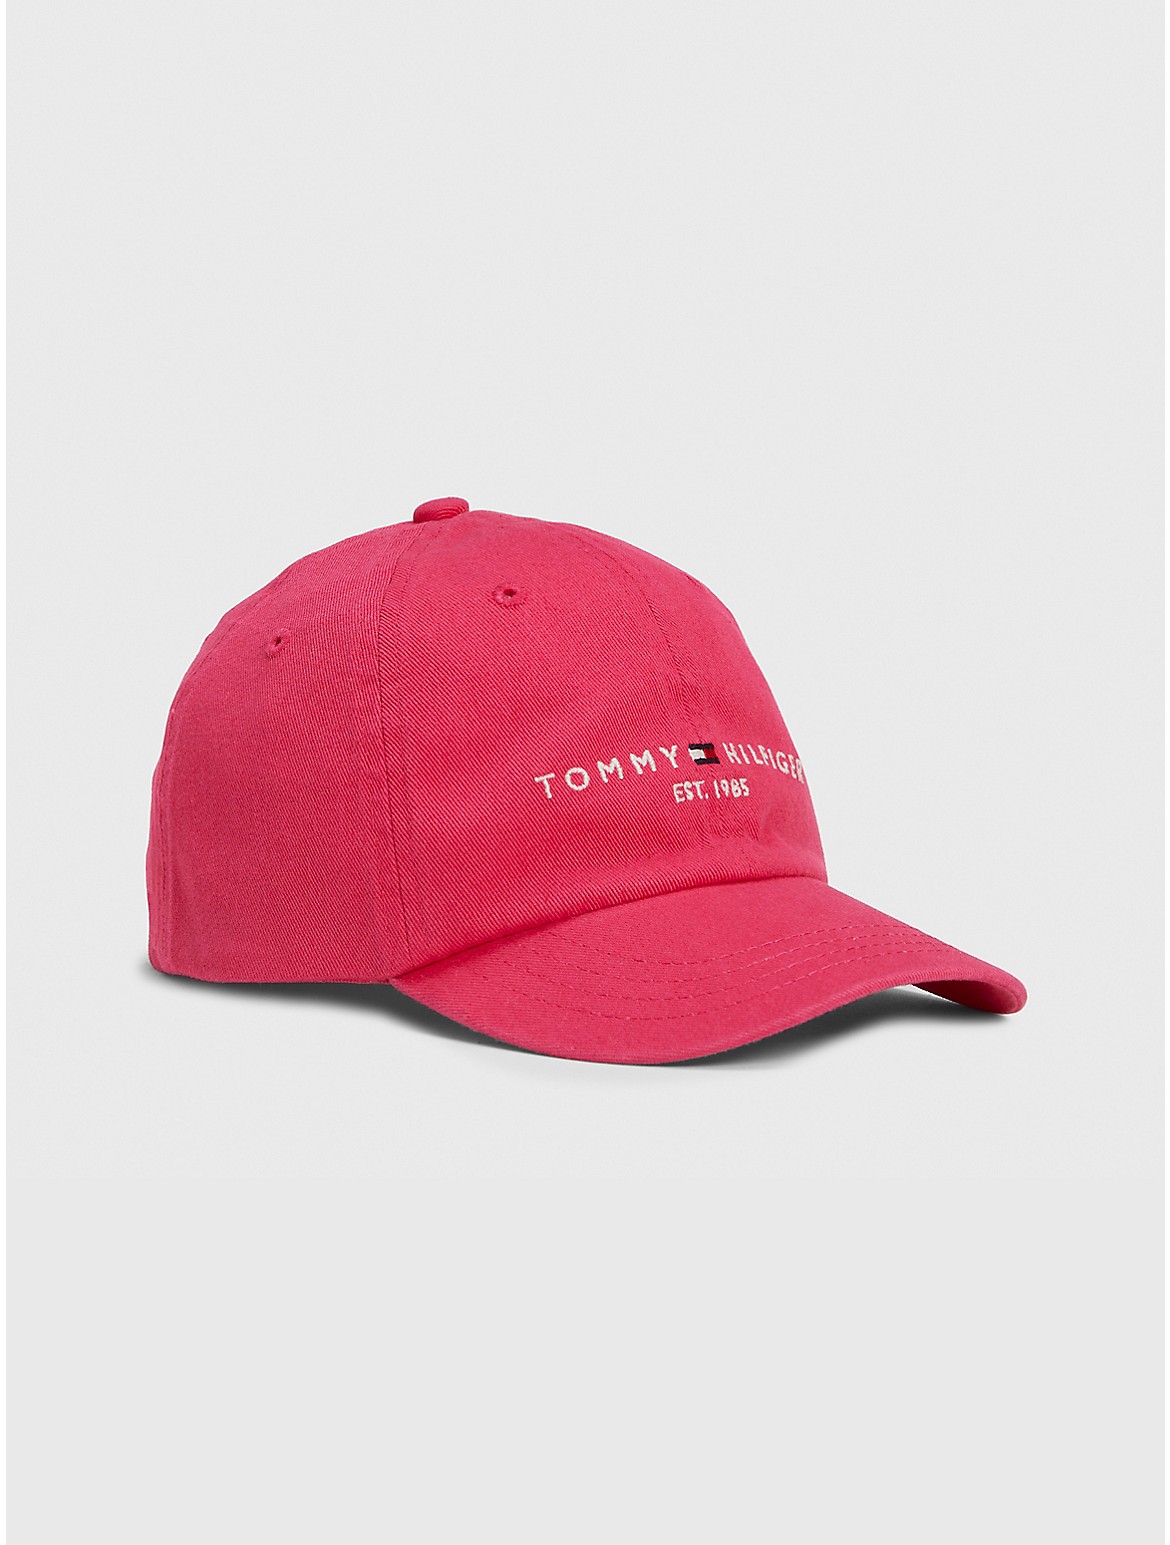 Tommy Hilfiger Kids' Tommy Logo Baseball Cap - Pink - S